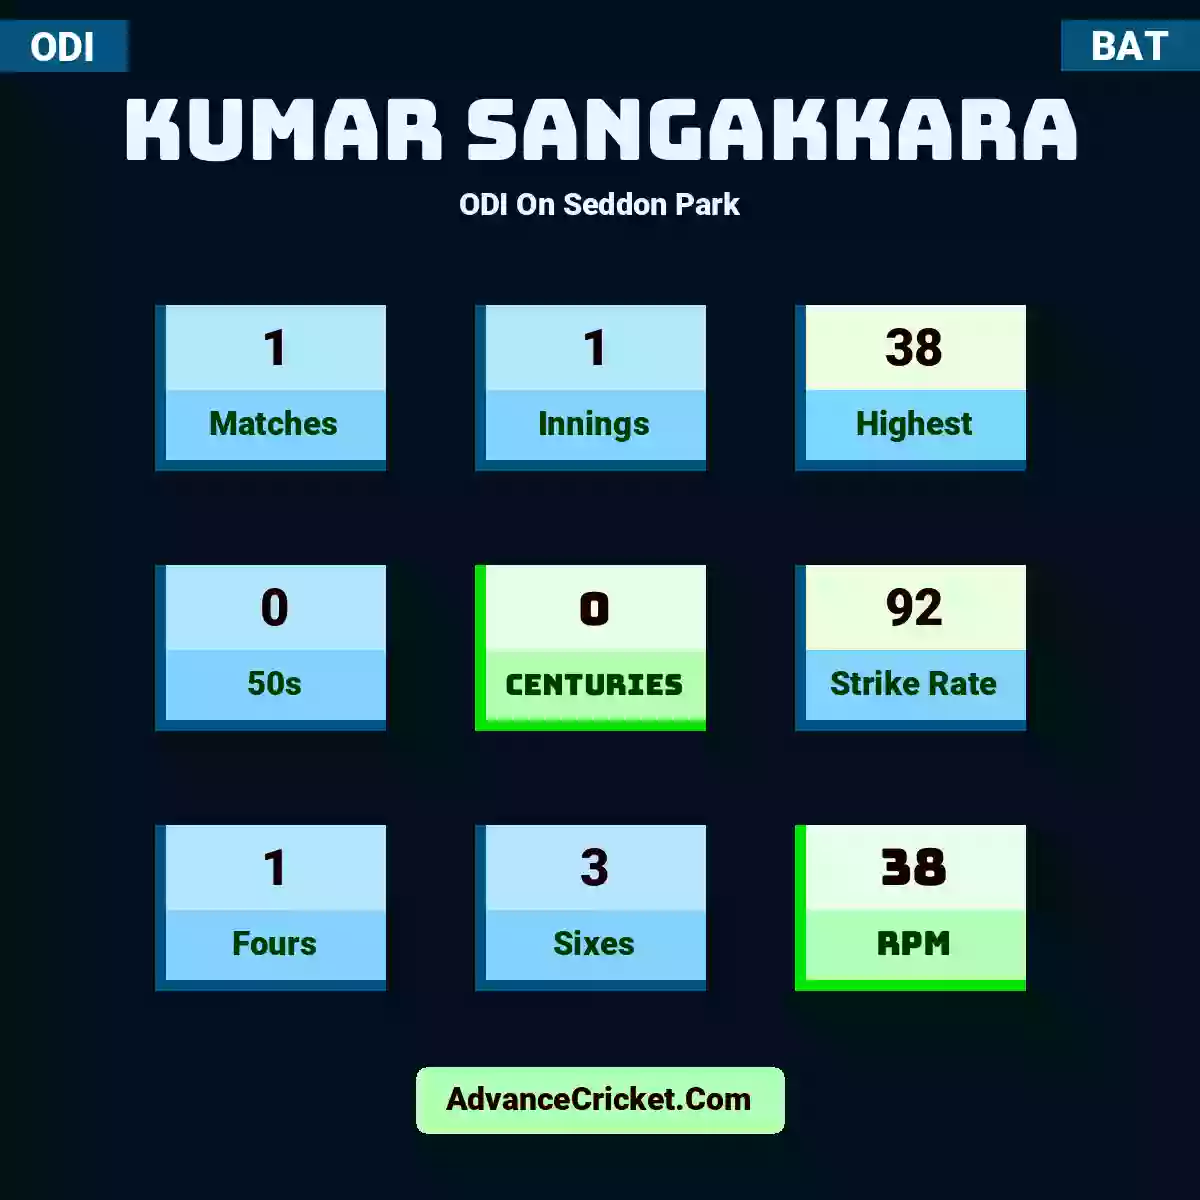 Kumar Sangakkara ODI  On Seddon Park, Kumar Sangakkara played 1 matches, scored 38 runs as highest, 0 half-centuries, and 0 centuries, with a strike rate of 92. K.Sangakkara hit 1 fours and 3 sixes, with an RPM of 38.